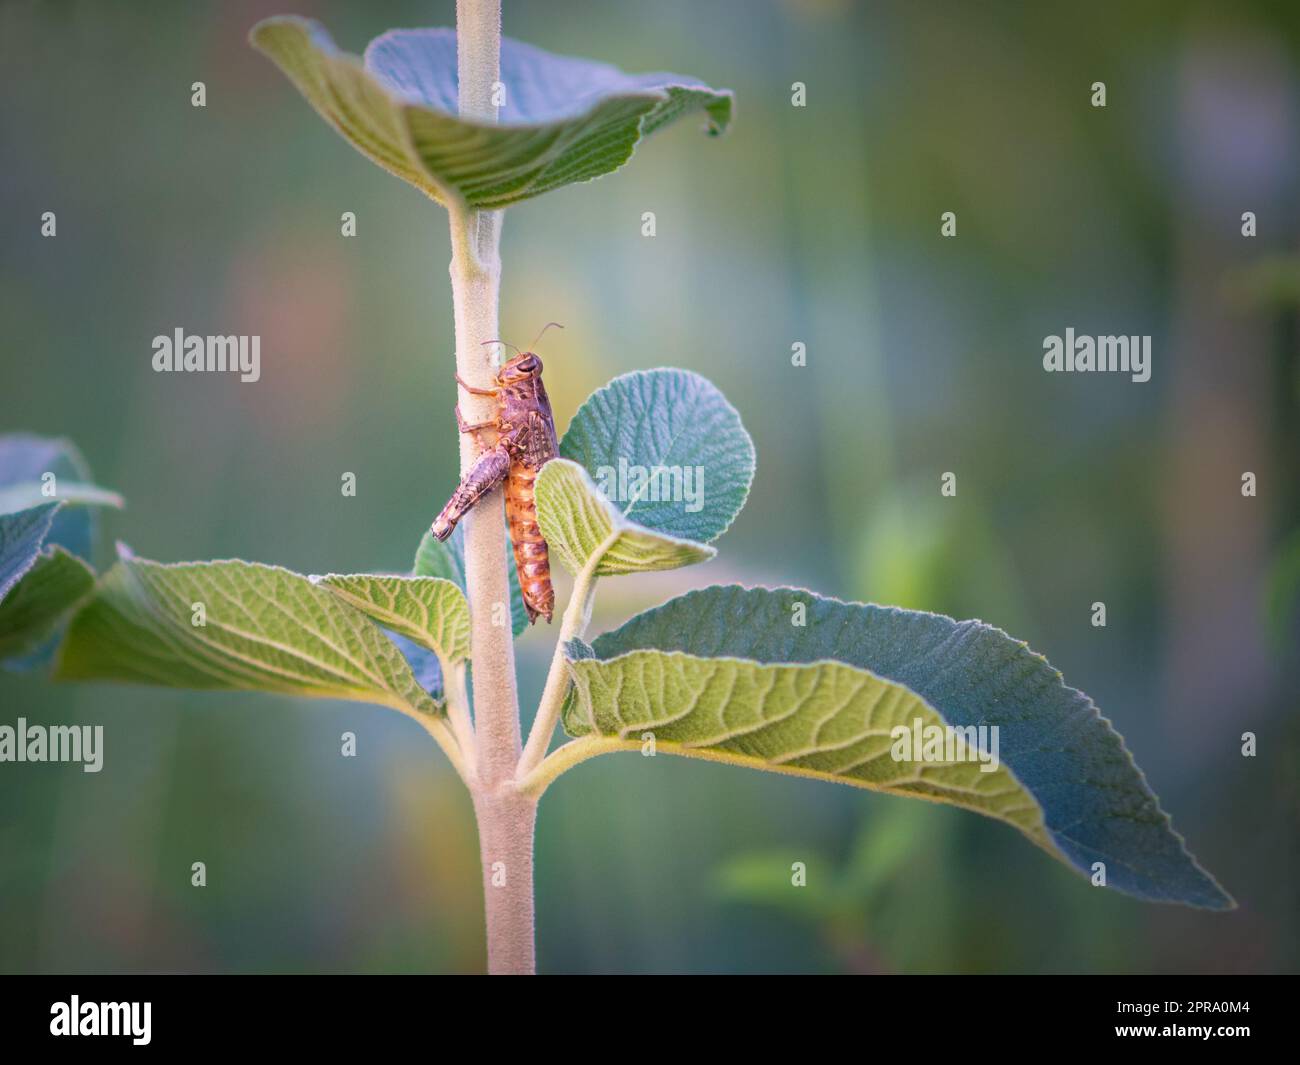 Brauner Grashüpfer, Bombay Locust auf grünem Blatt Stockfoto